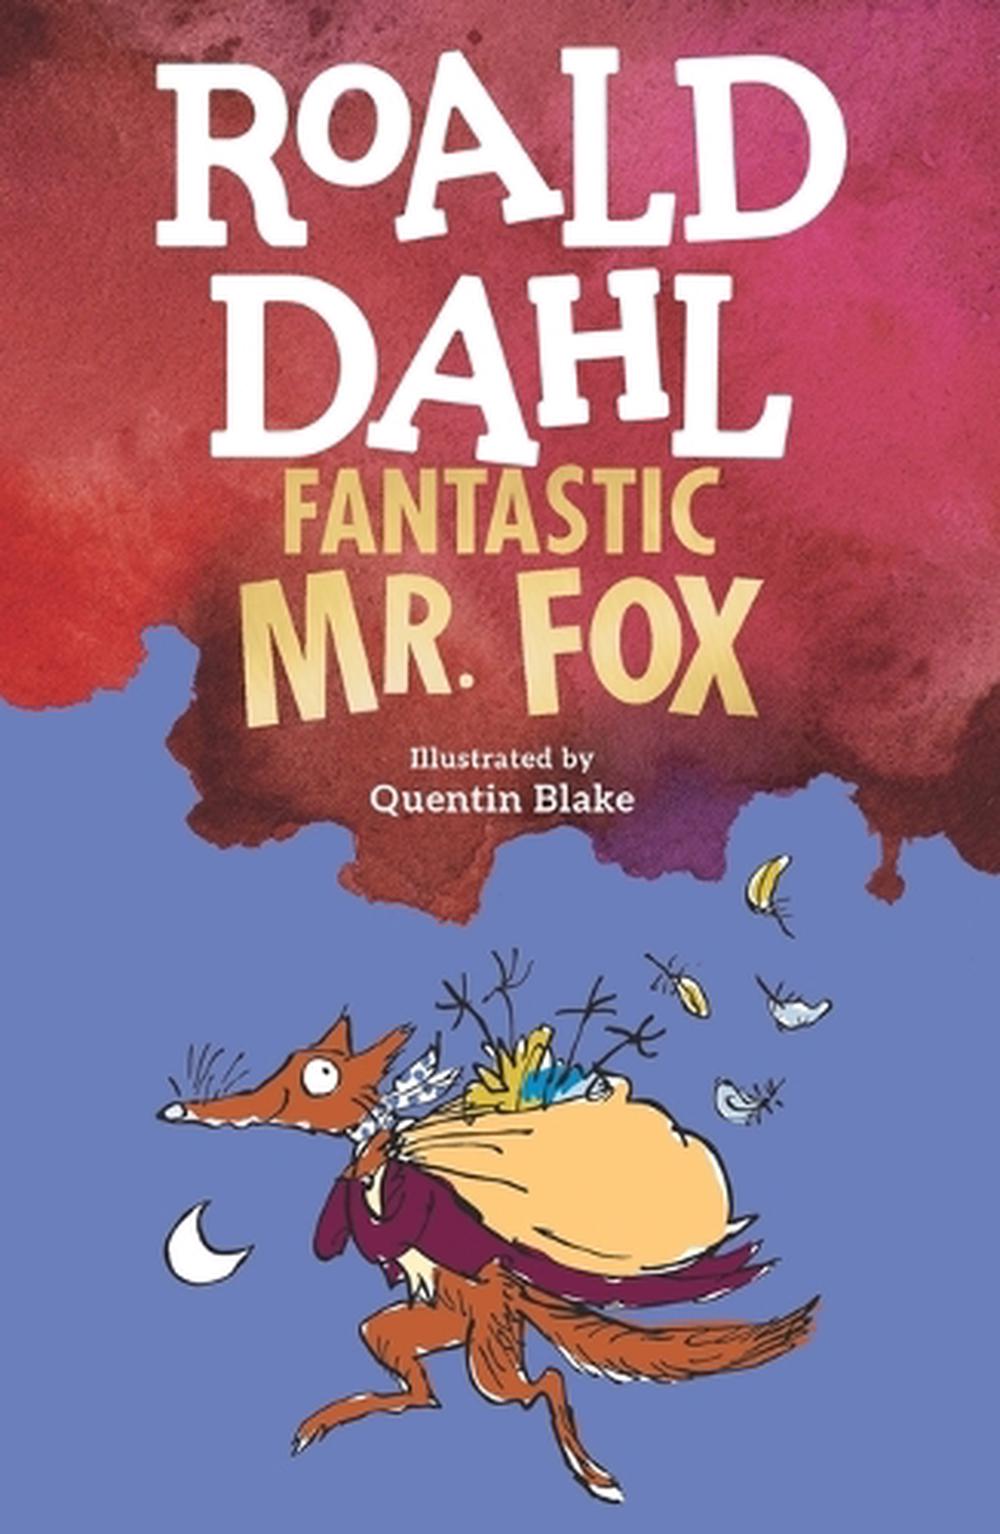 Fantastic Mr. Fox by Roald Dahl, Paperback, 9780142410349 | Buy online ...